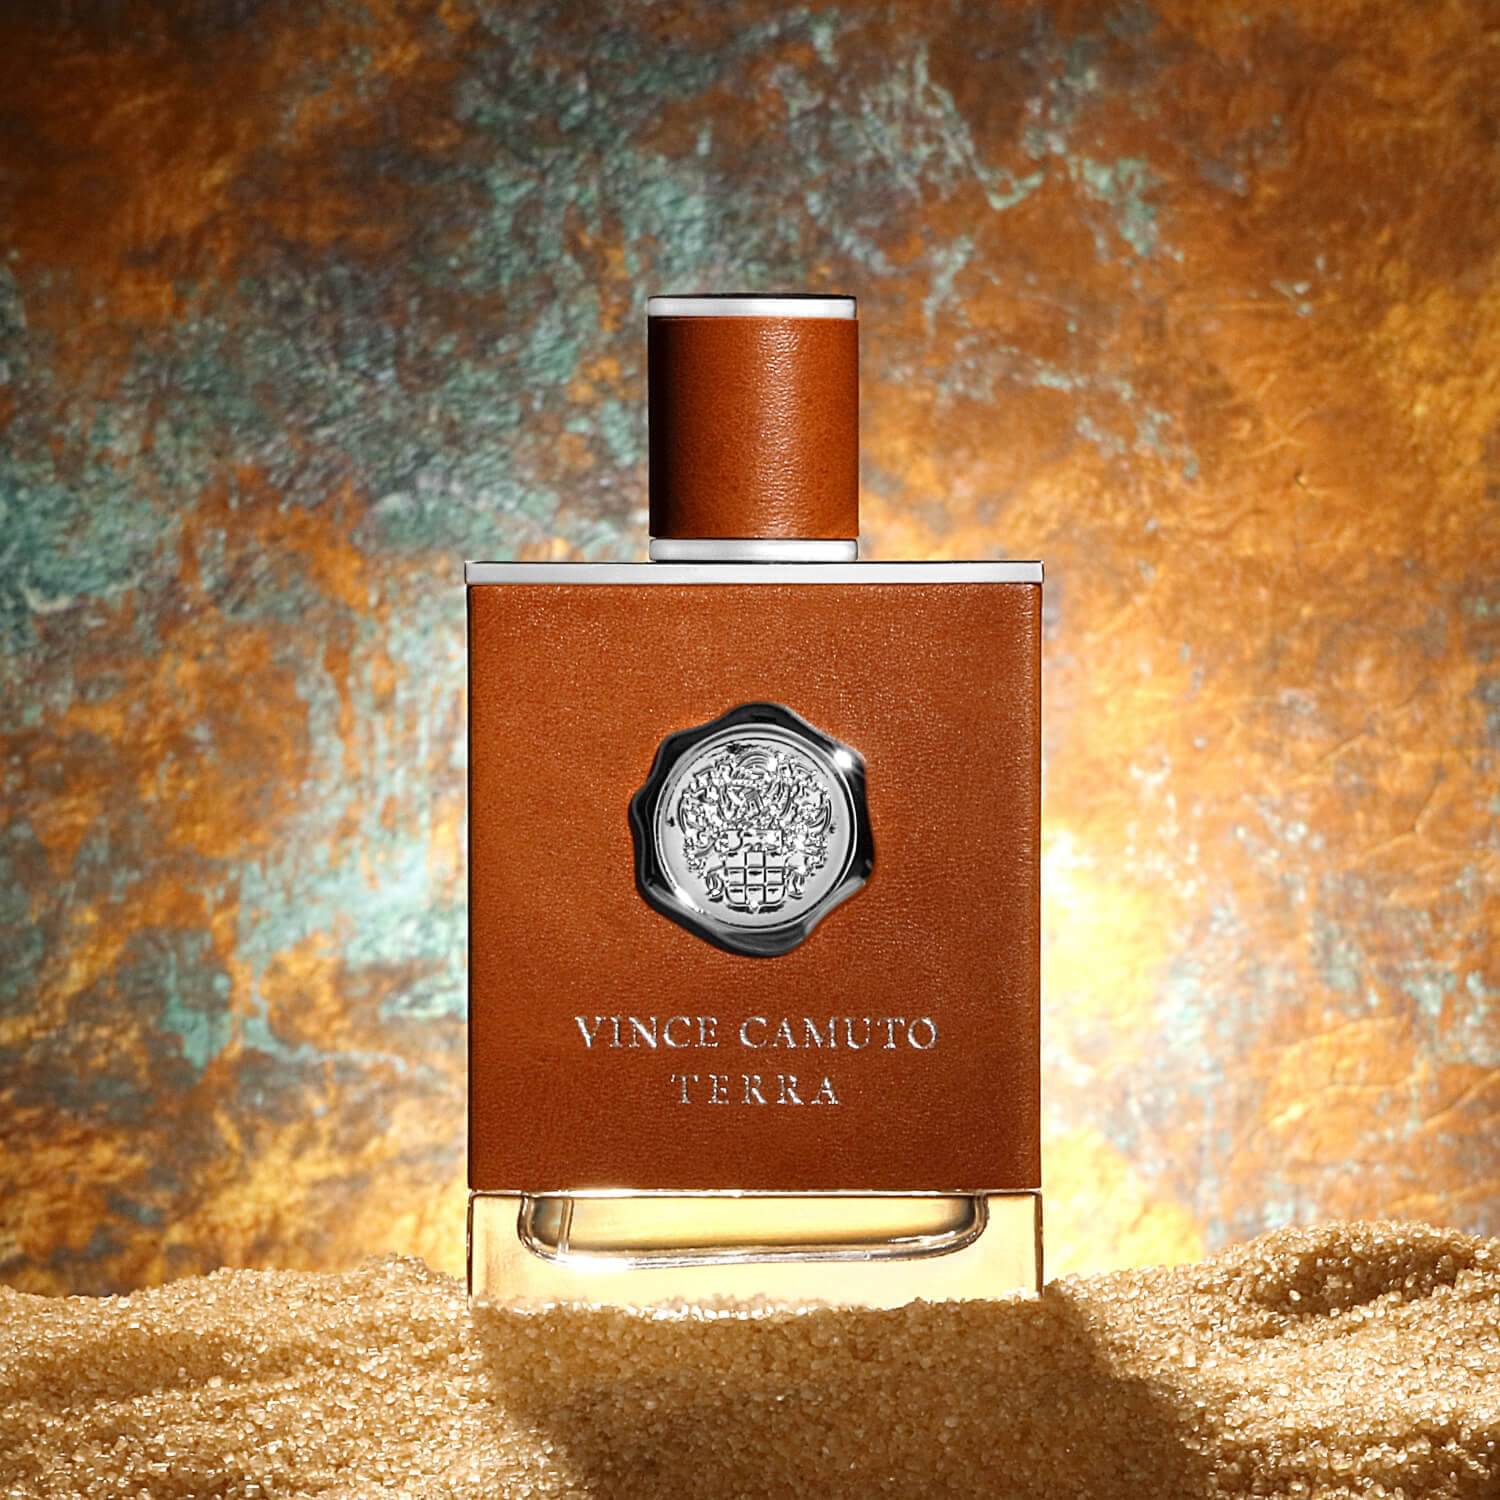 Terra Vince Camuto cologne - a fragrance for men 2017